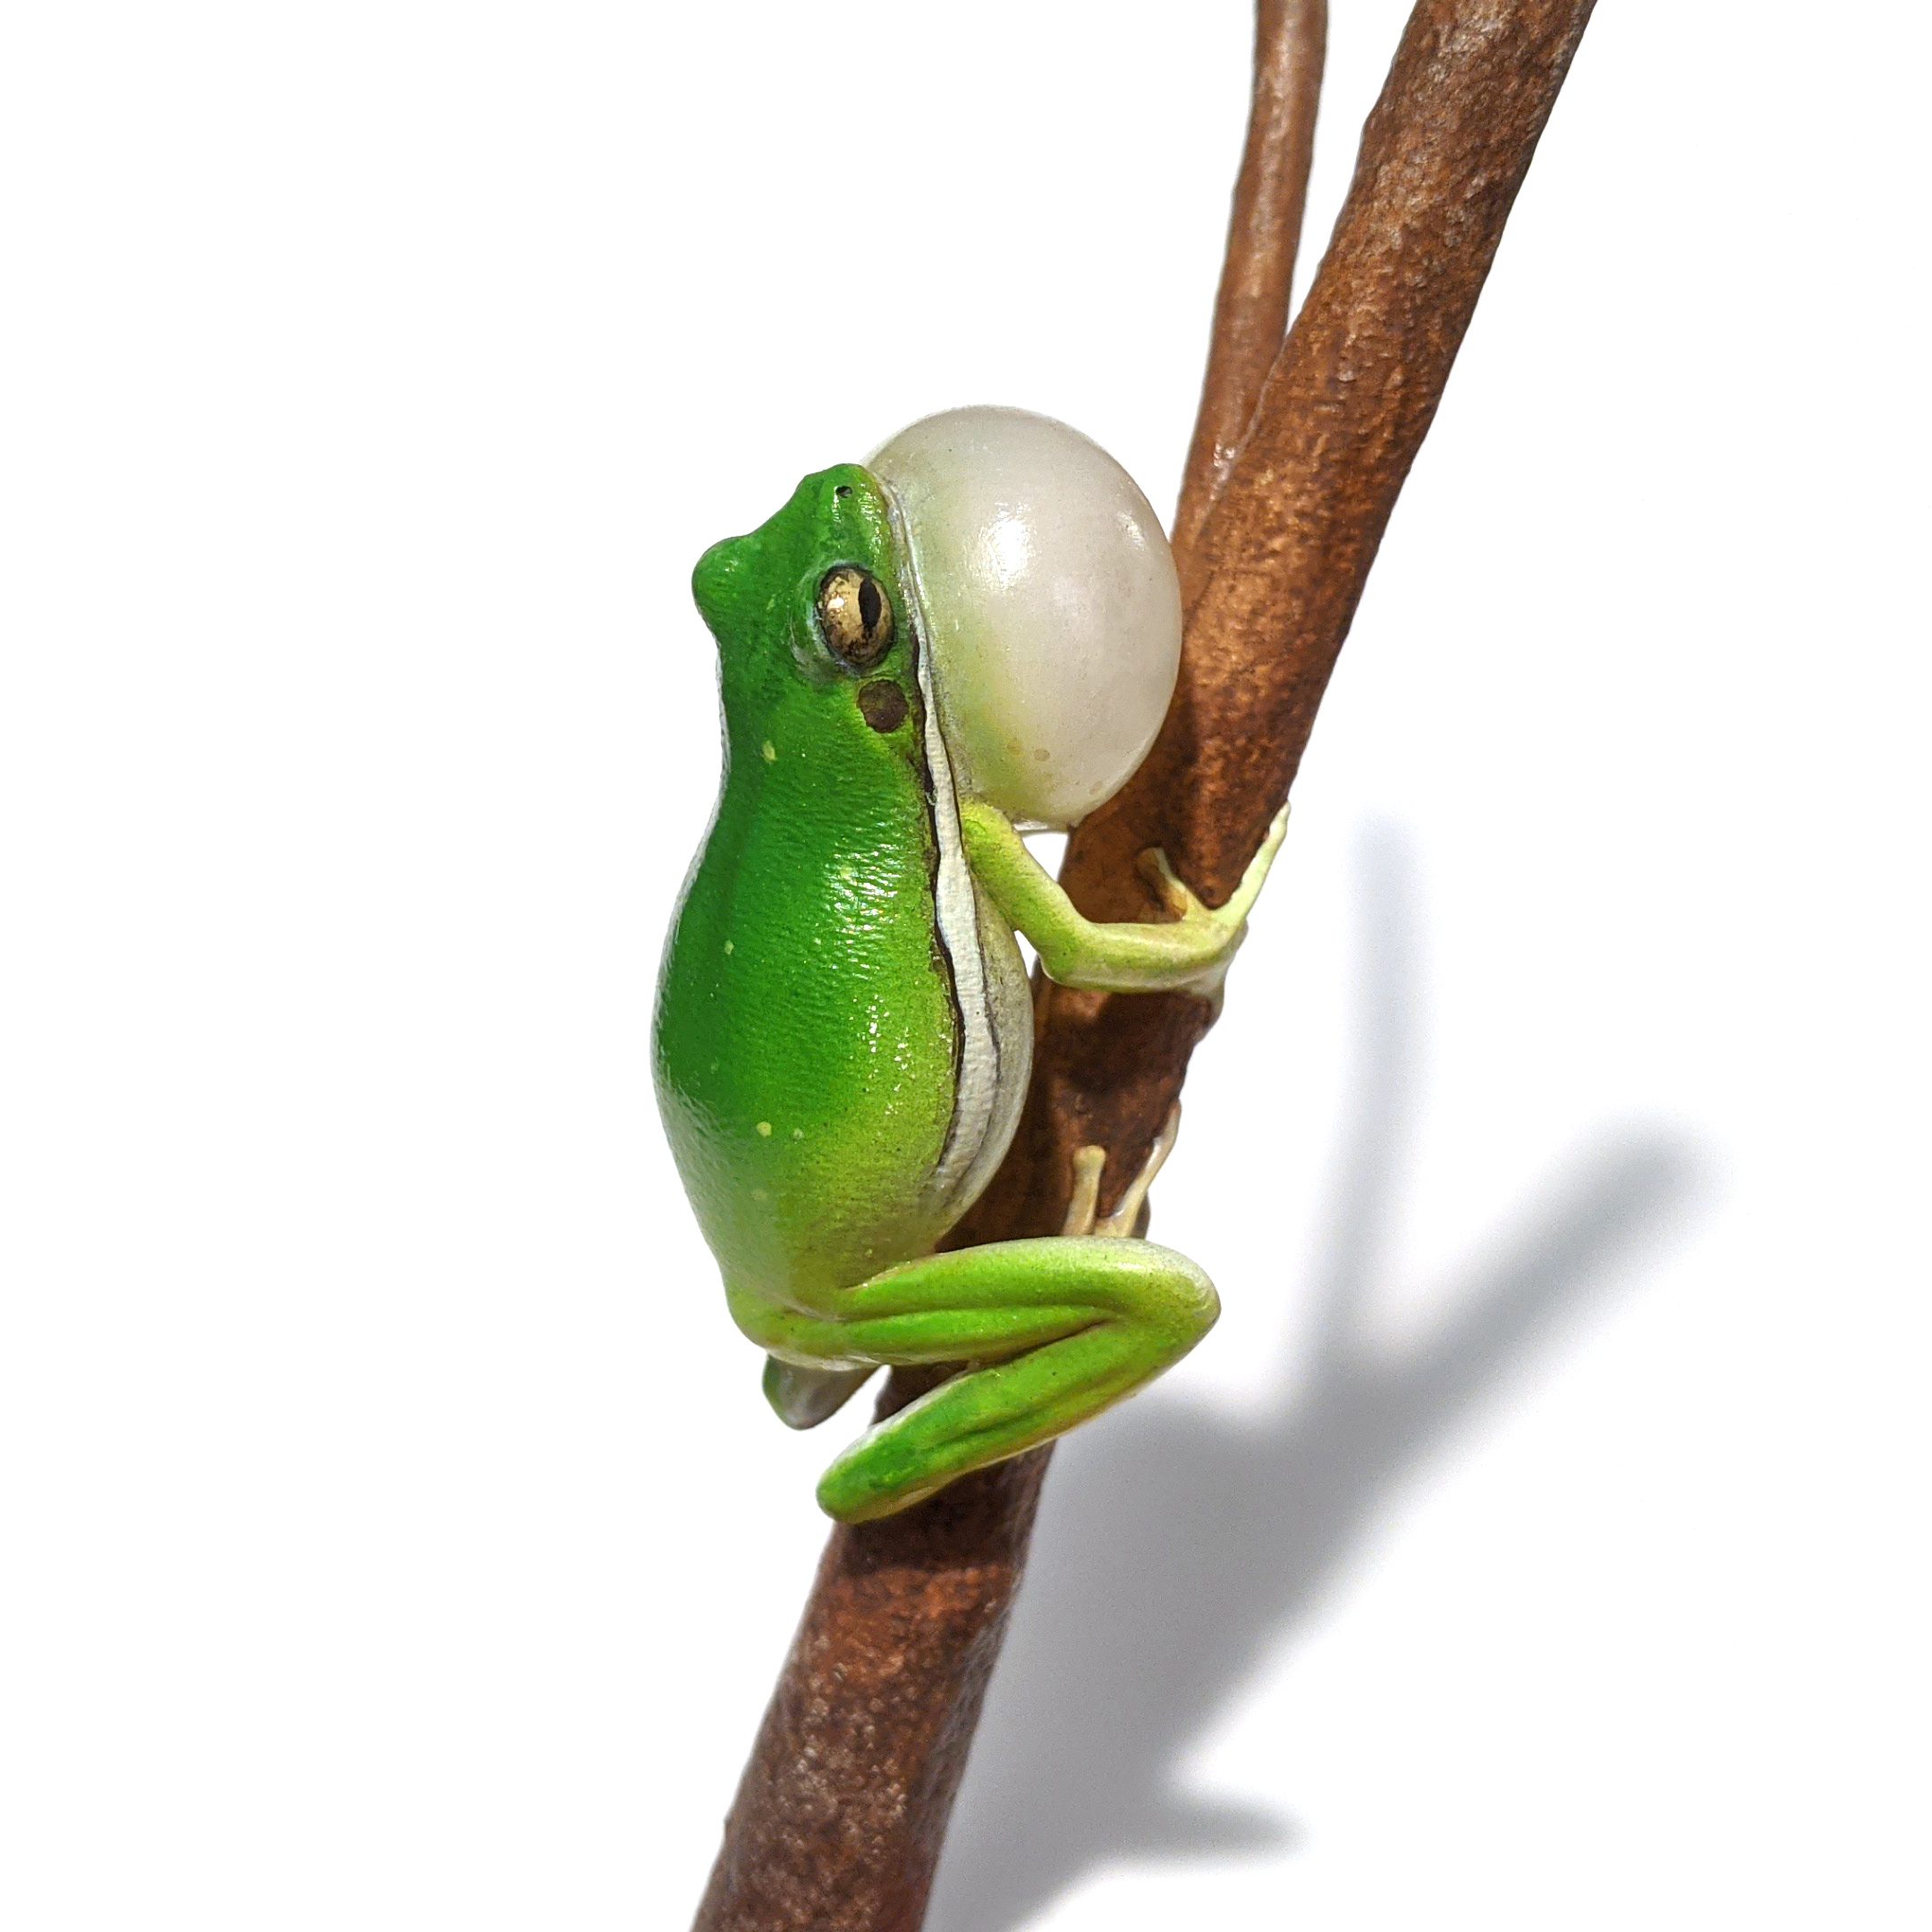 American Green Tree Frog (Dryophytes cinereus) on a Twig Model